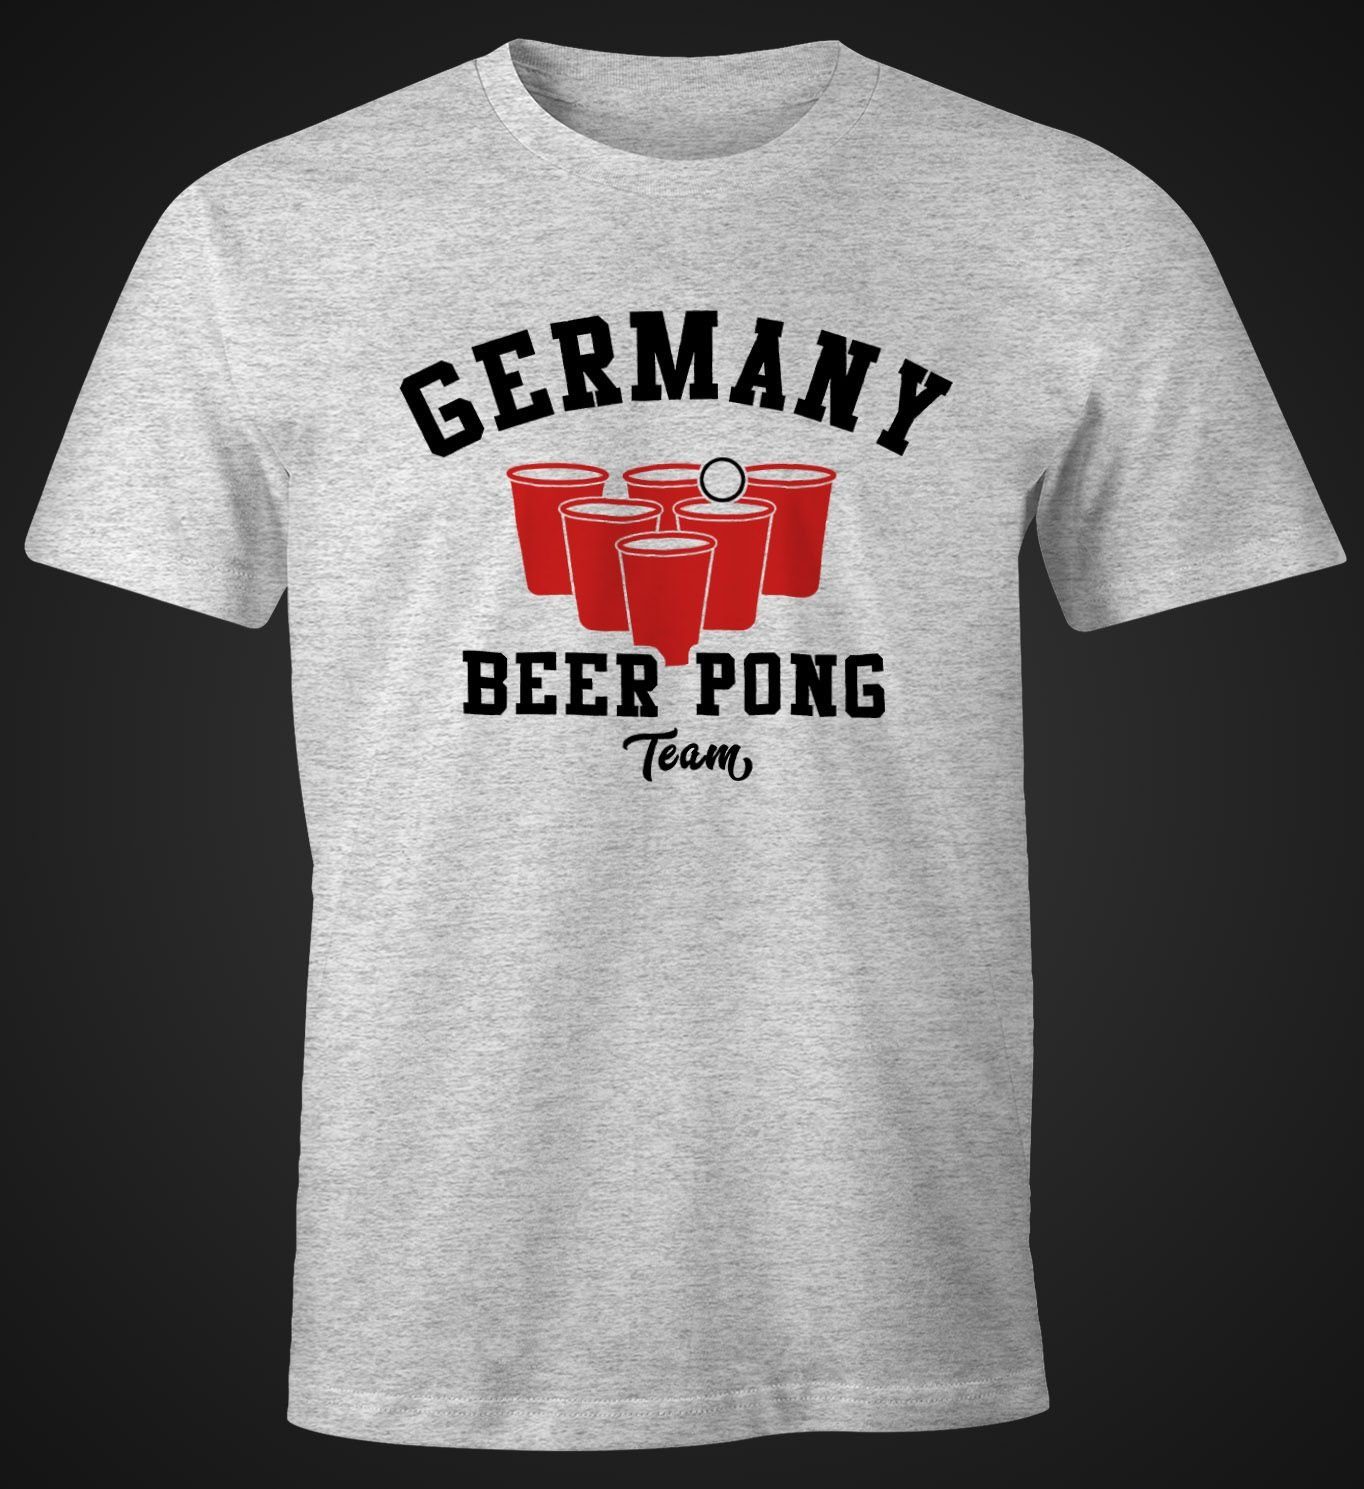 Moonworks® Print Fun-Shirt Herren grau Bier Team Germany mit MoonWorks Print-Shirt Pong Beer T-Shirt